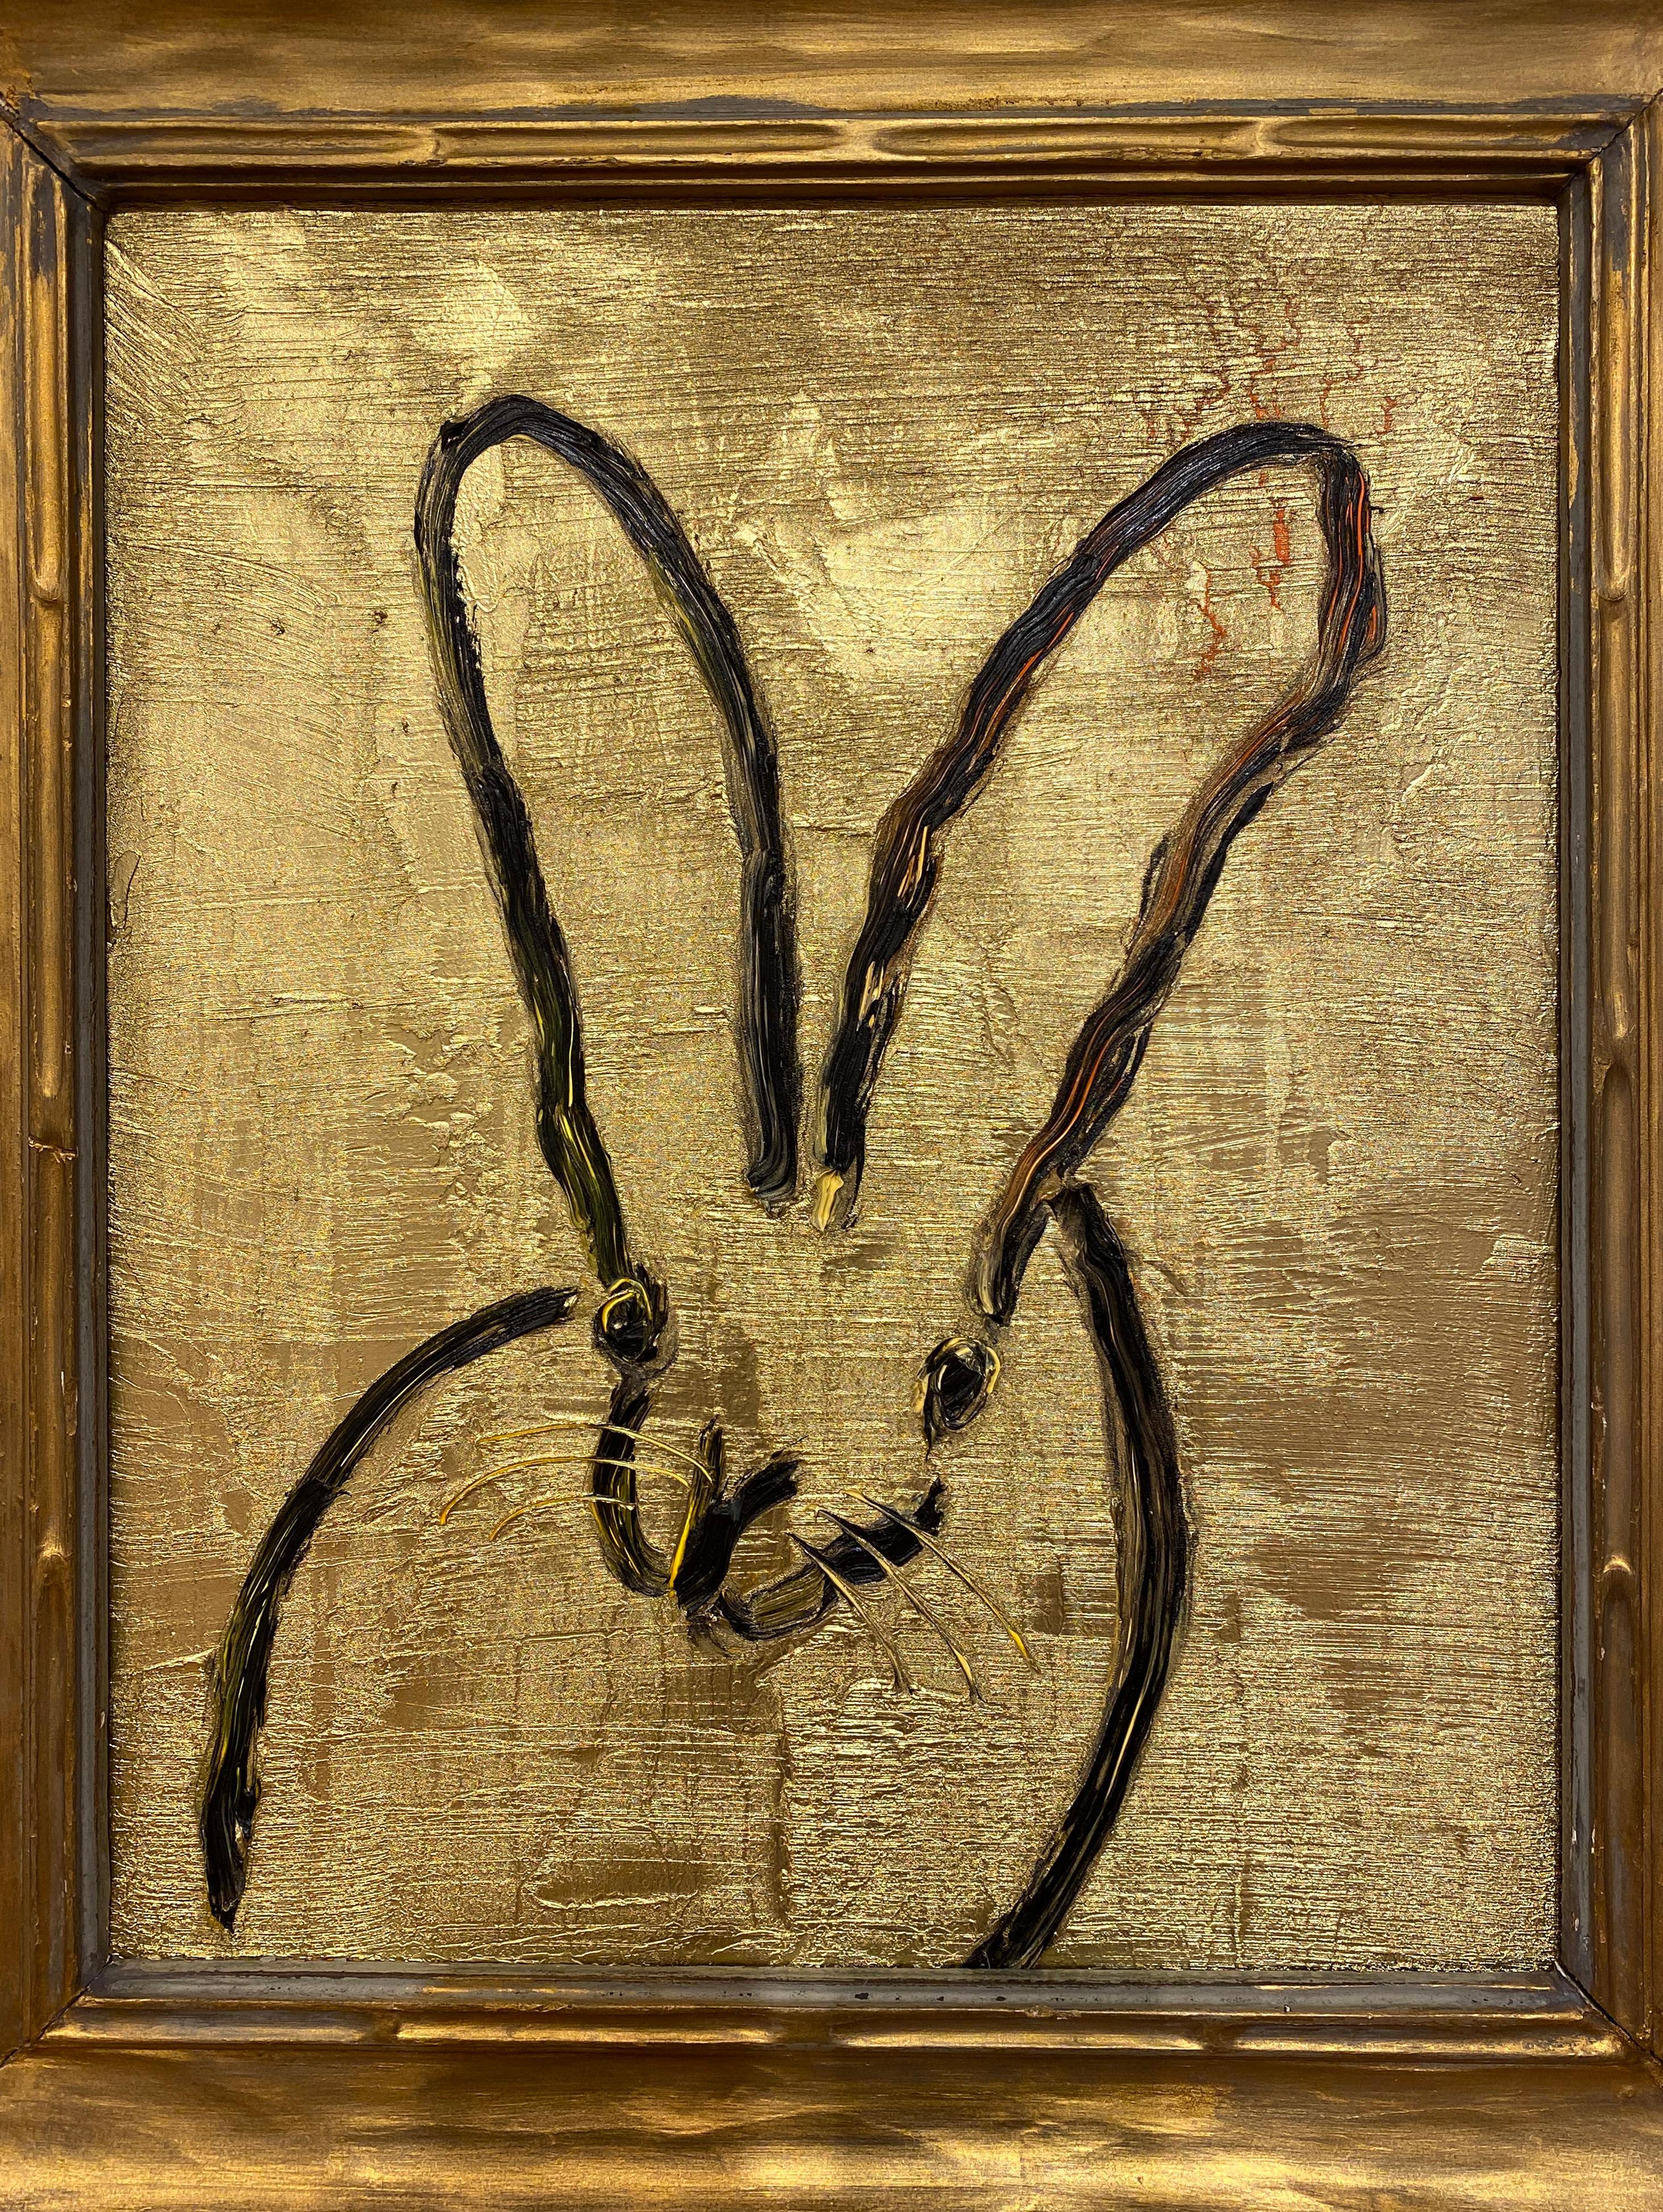 Artist:  Slonem, Hunt
Title:  Bunny in Gold
Series:  Bunnies
Date:  2021
Medium:  Oil on panel
Unframed Dimensions:  20